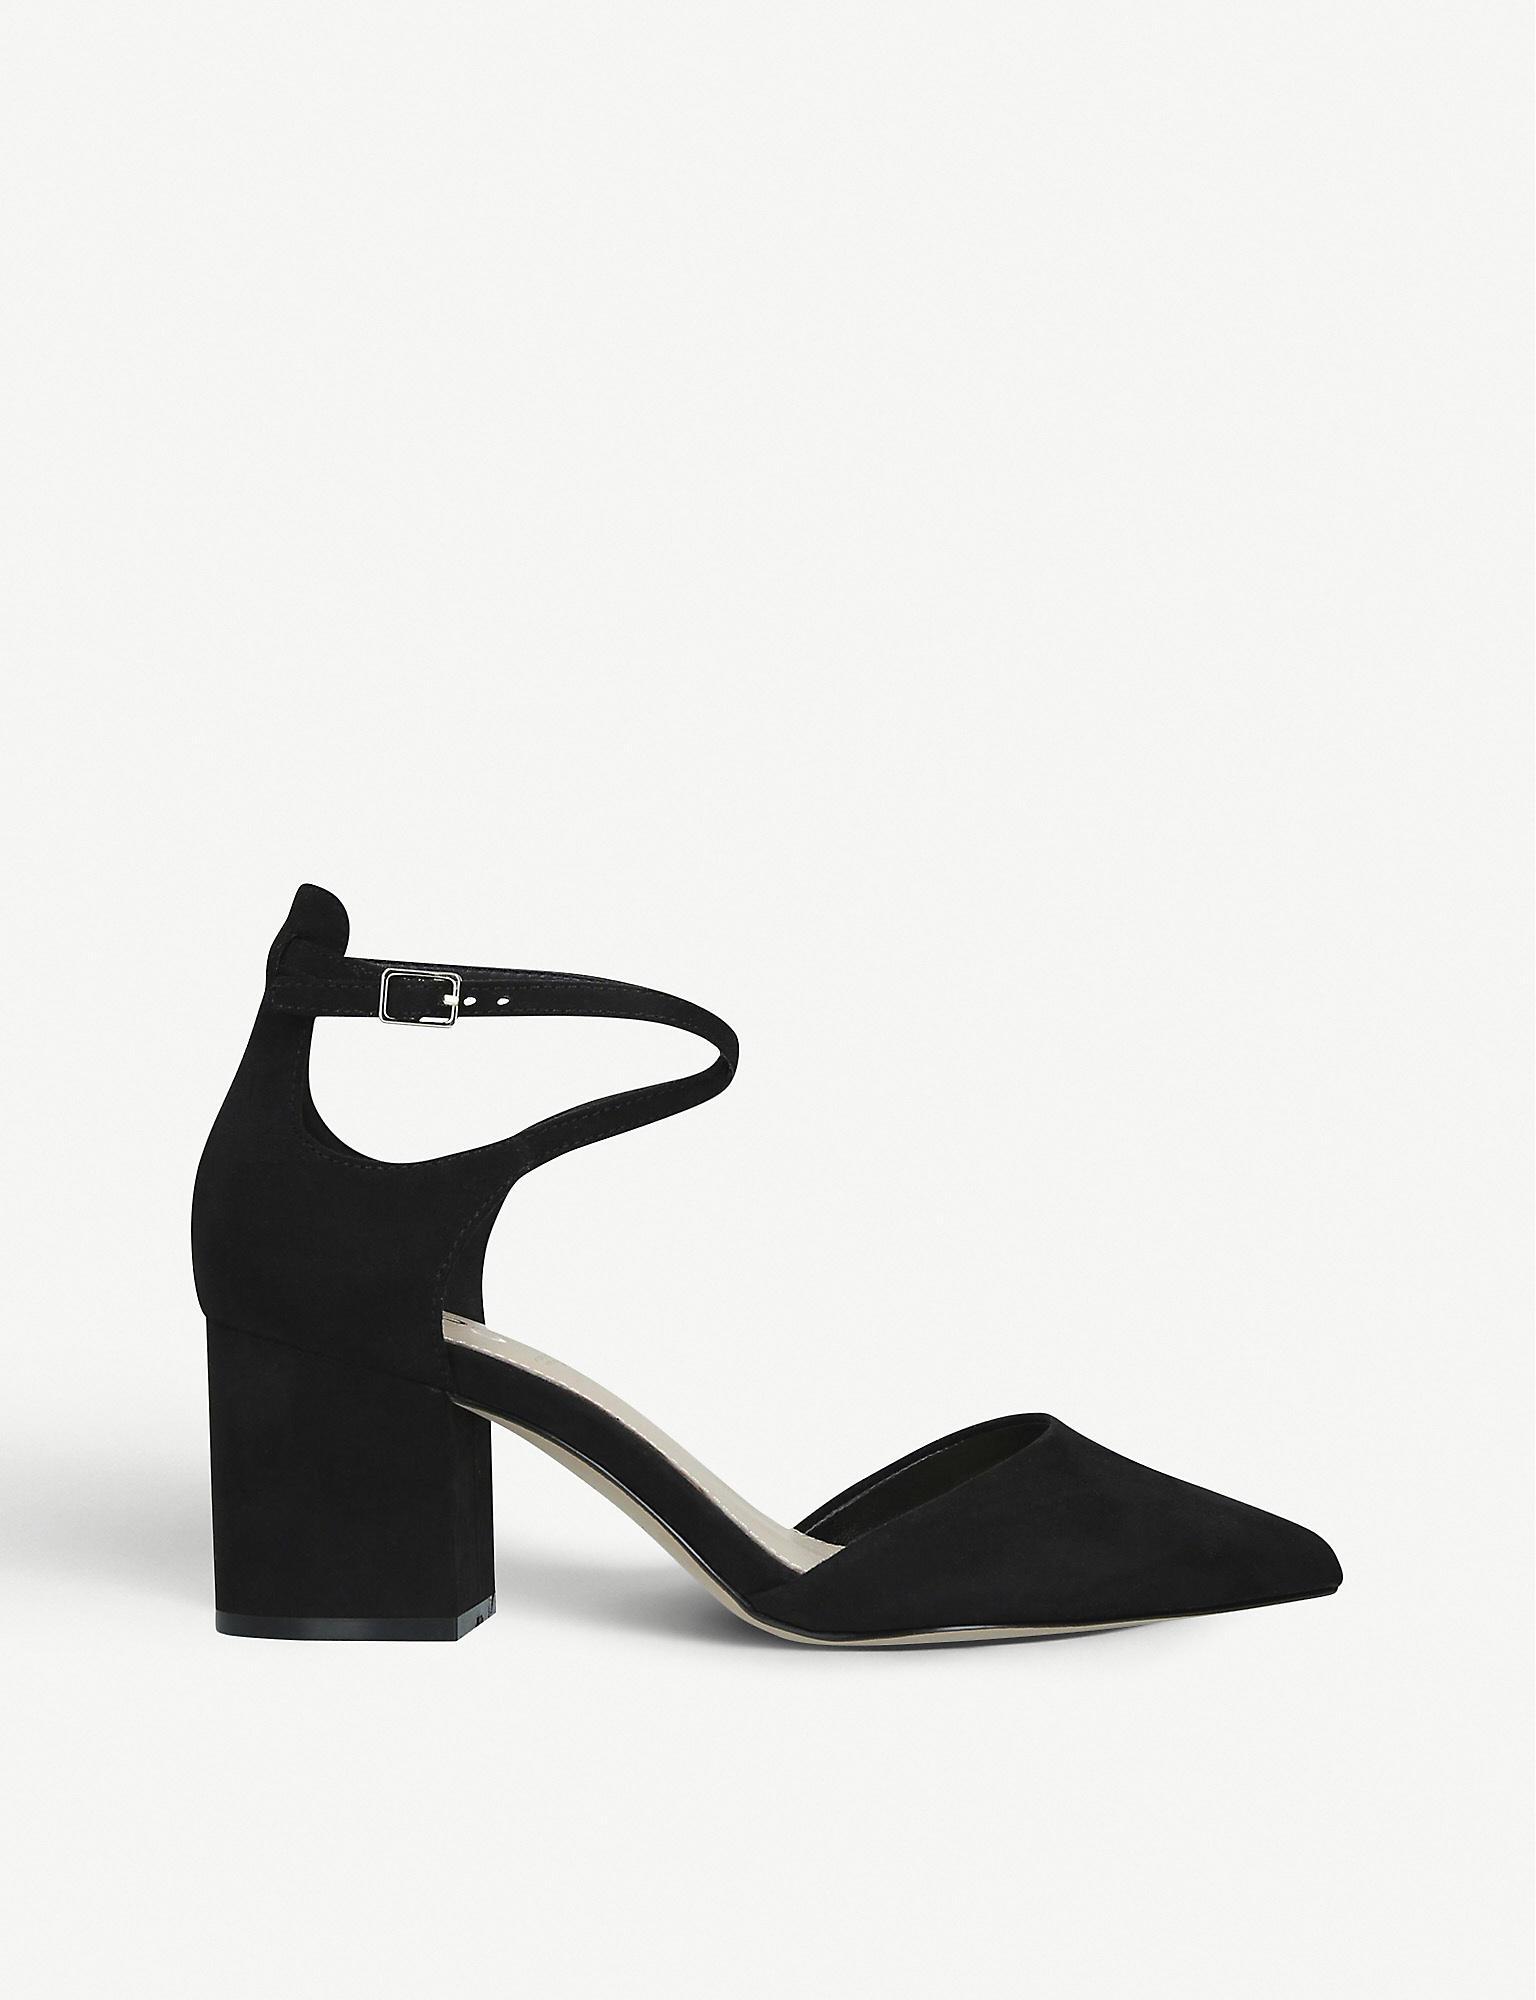 ALDO Synthetic Brookshear Block-heel Sandals in Black - Lyst